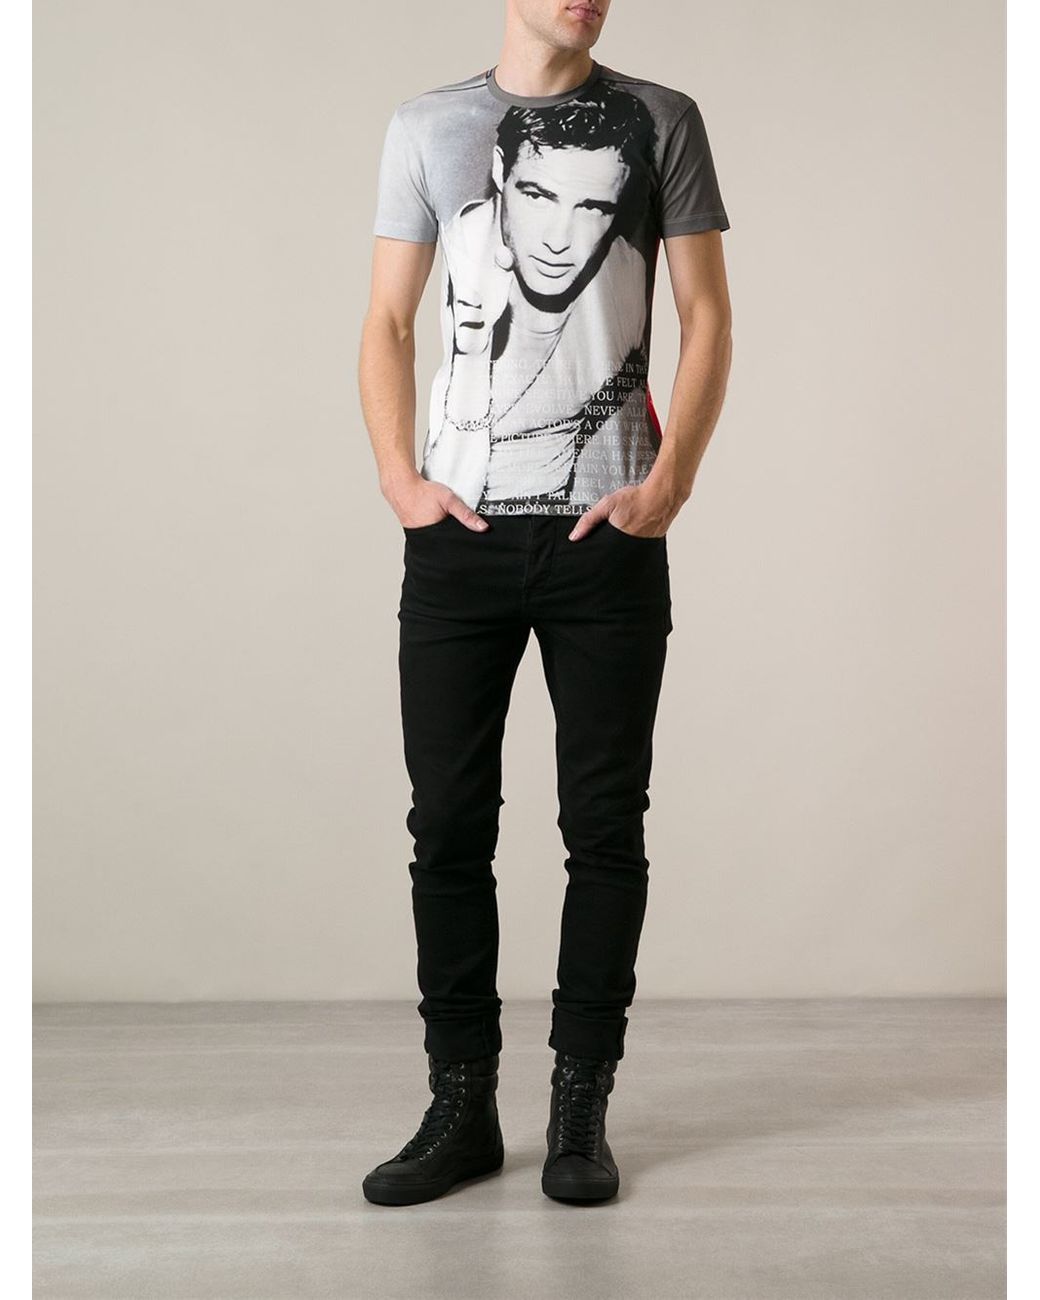 Dolce & Gabbana Marlon Brando T-Shirt in Gray for Men | Lyst